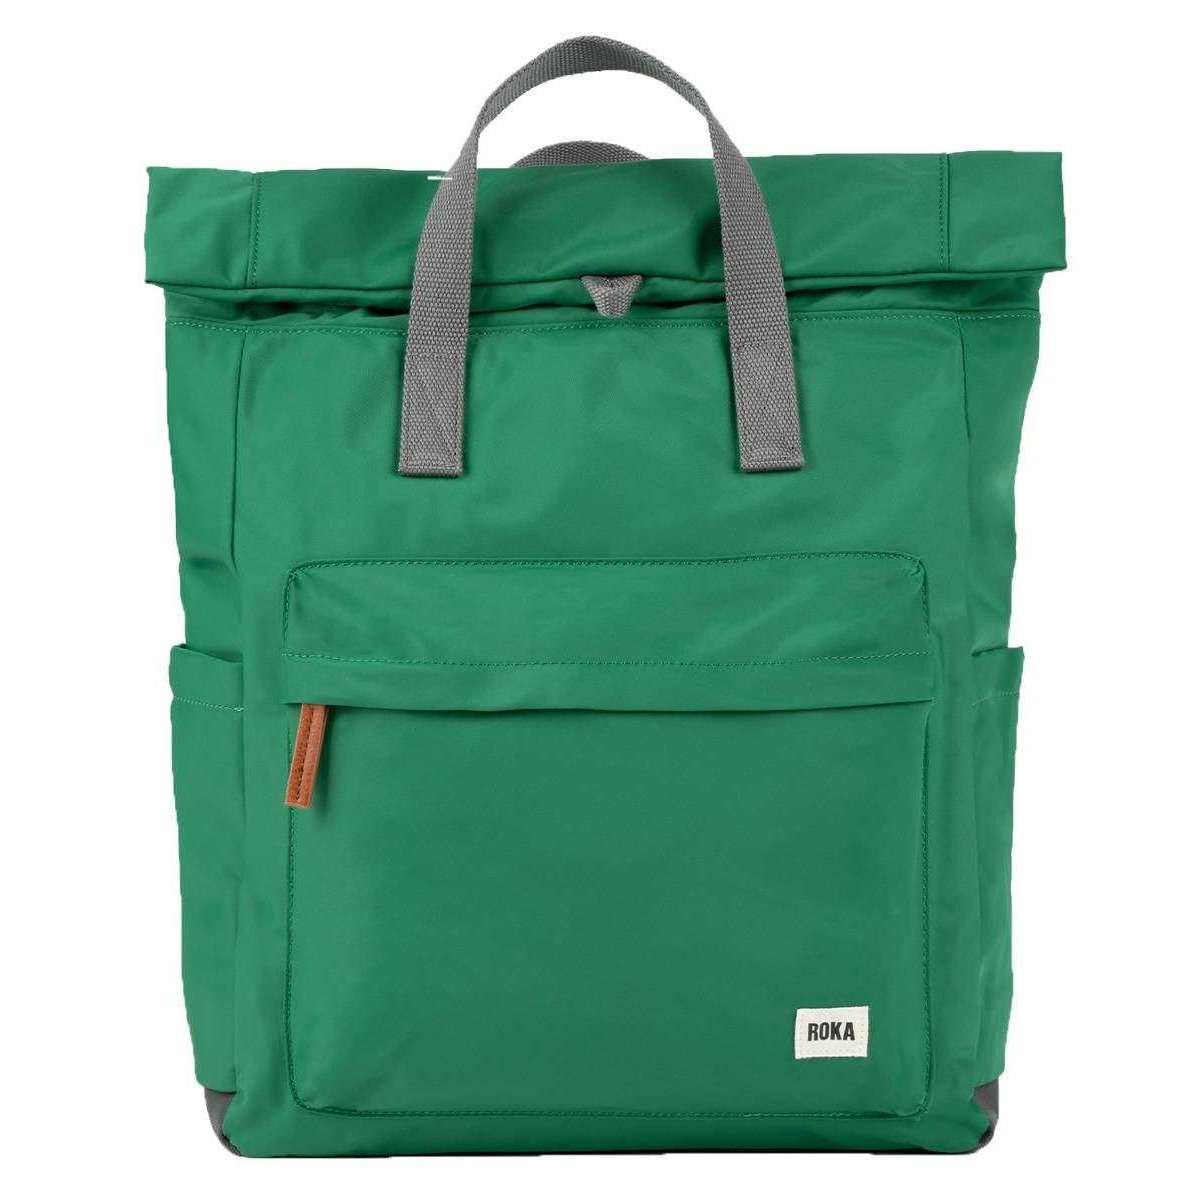 Roka Canfield B Large Sustainable Nylon Backpack - Emerald Green